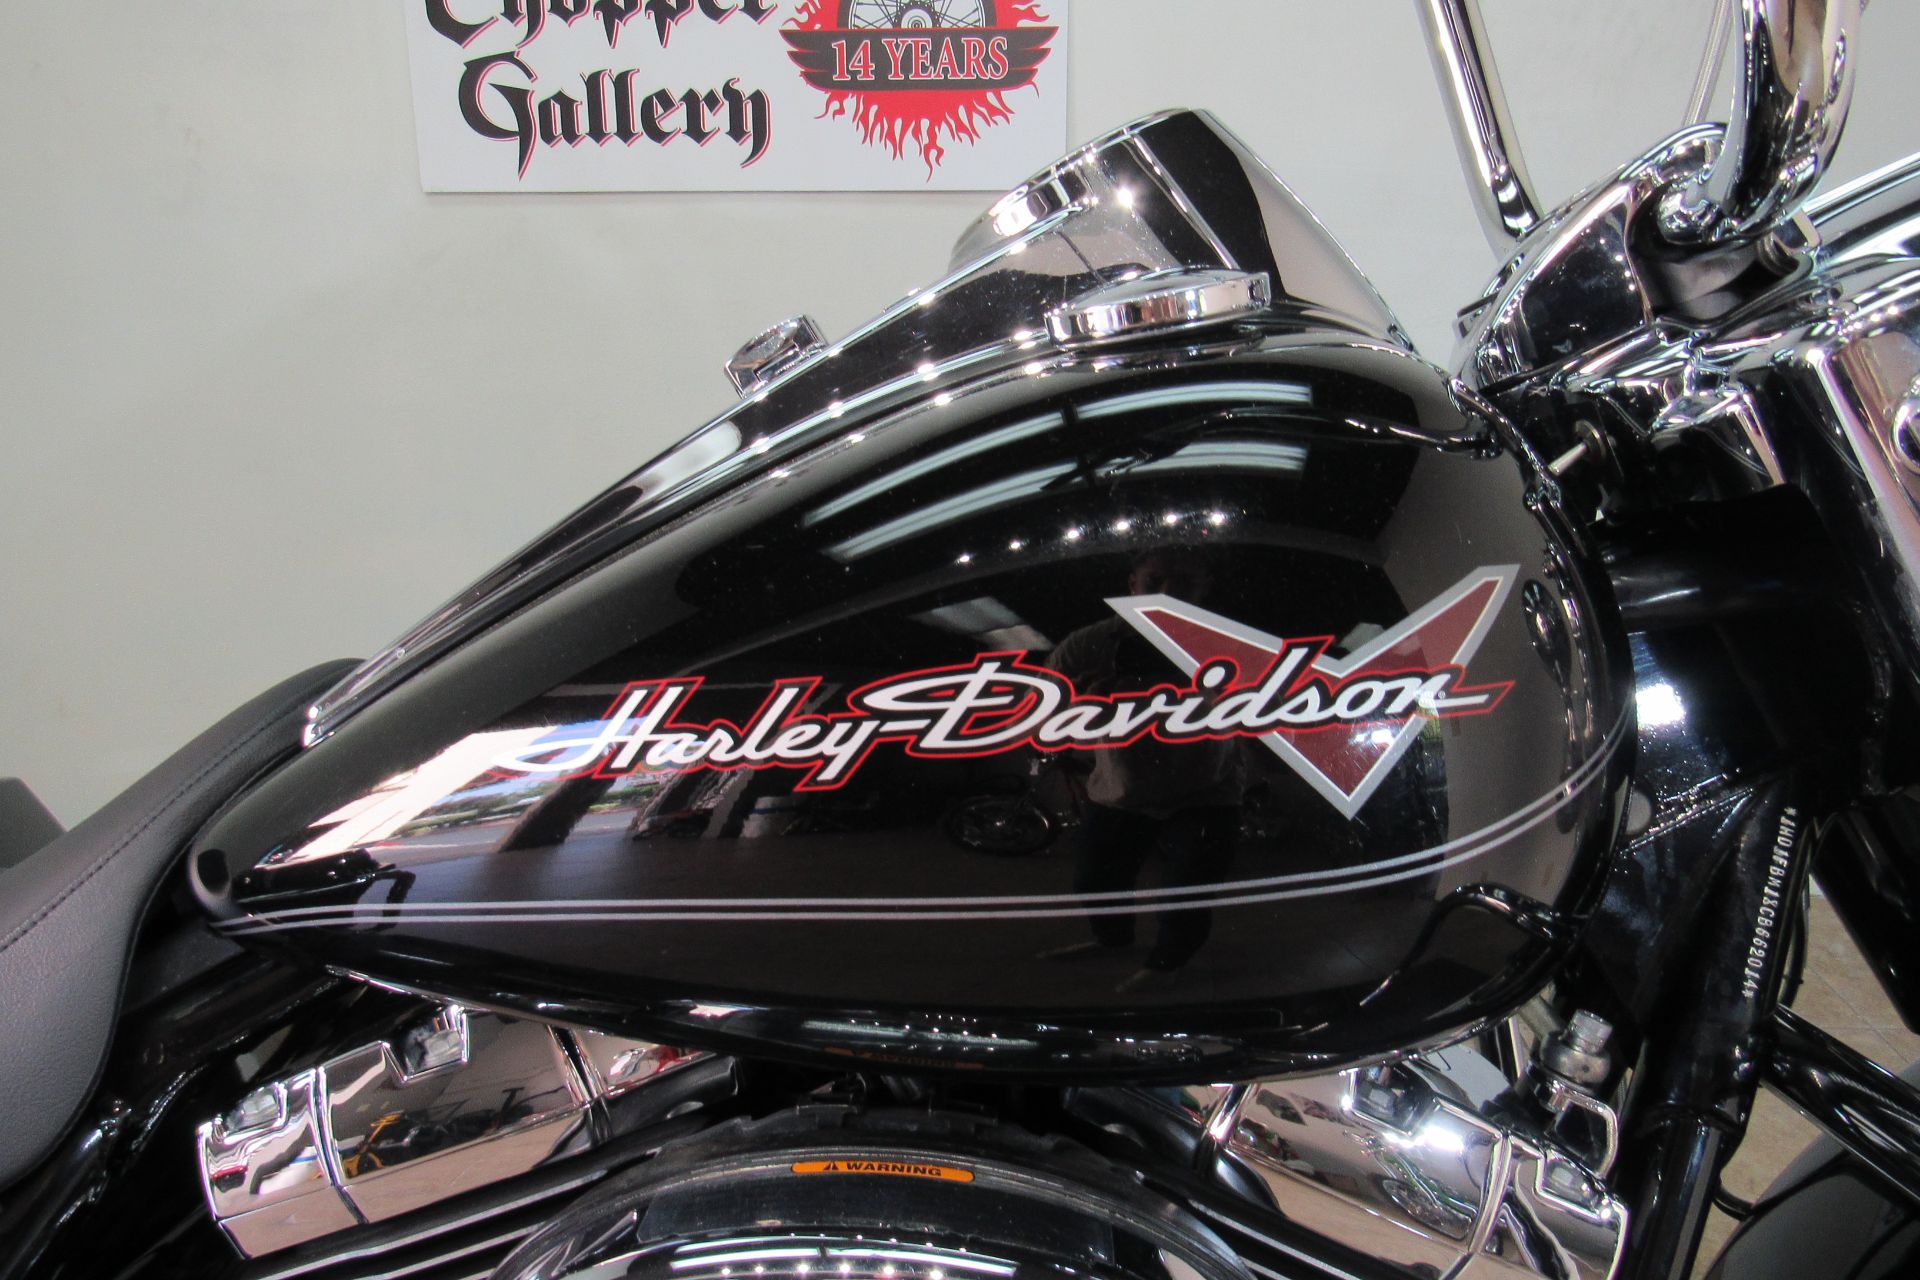 2012 Harley-Davidson Road King® in Temecula, California - Photo 7